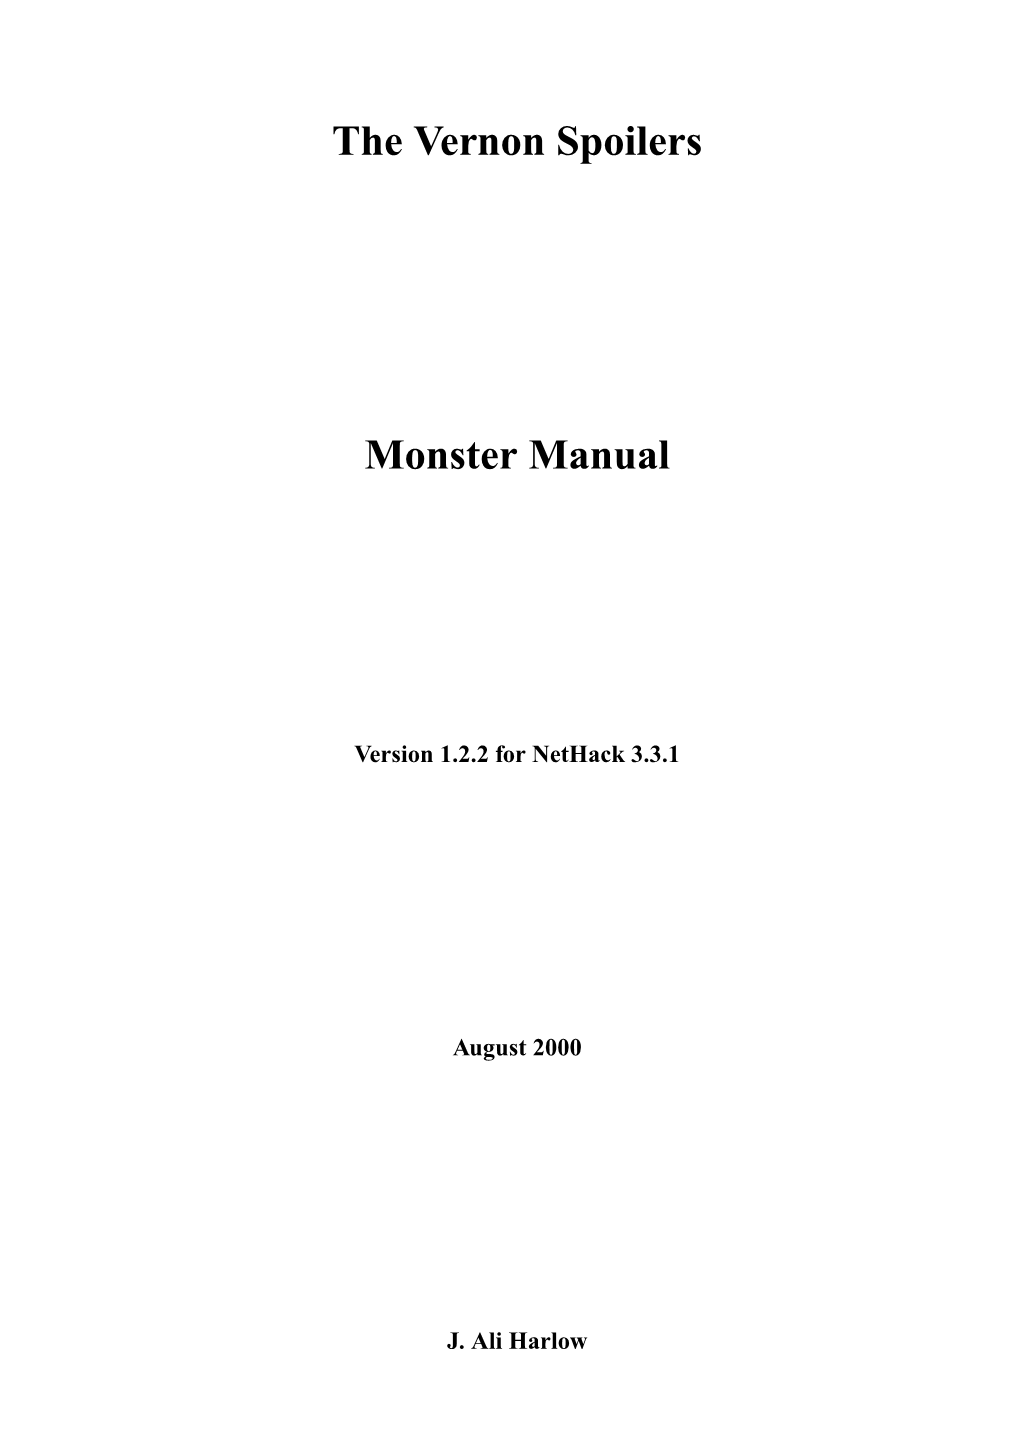 The Vernon Spoilers Vol 3: Monster Manual